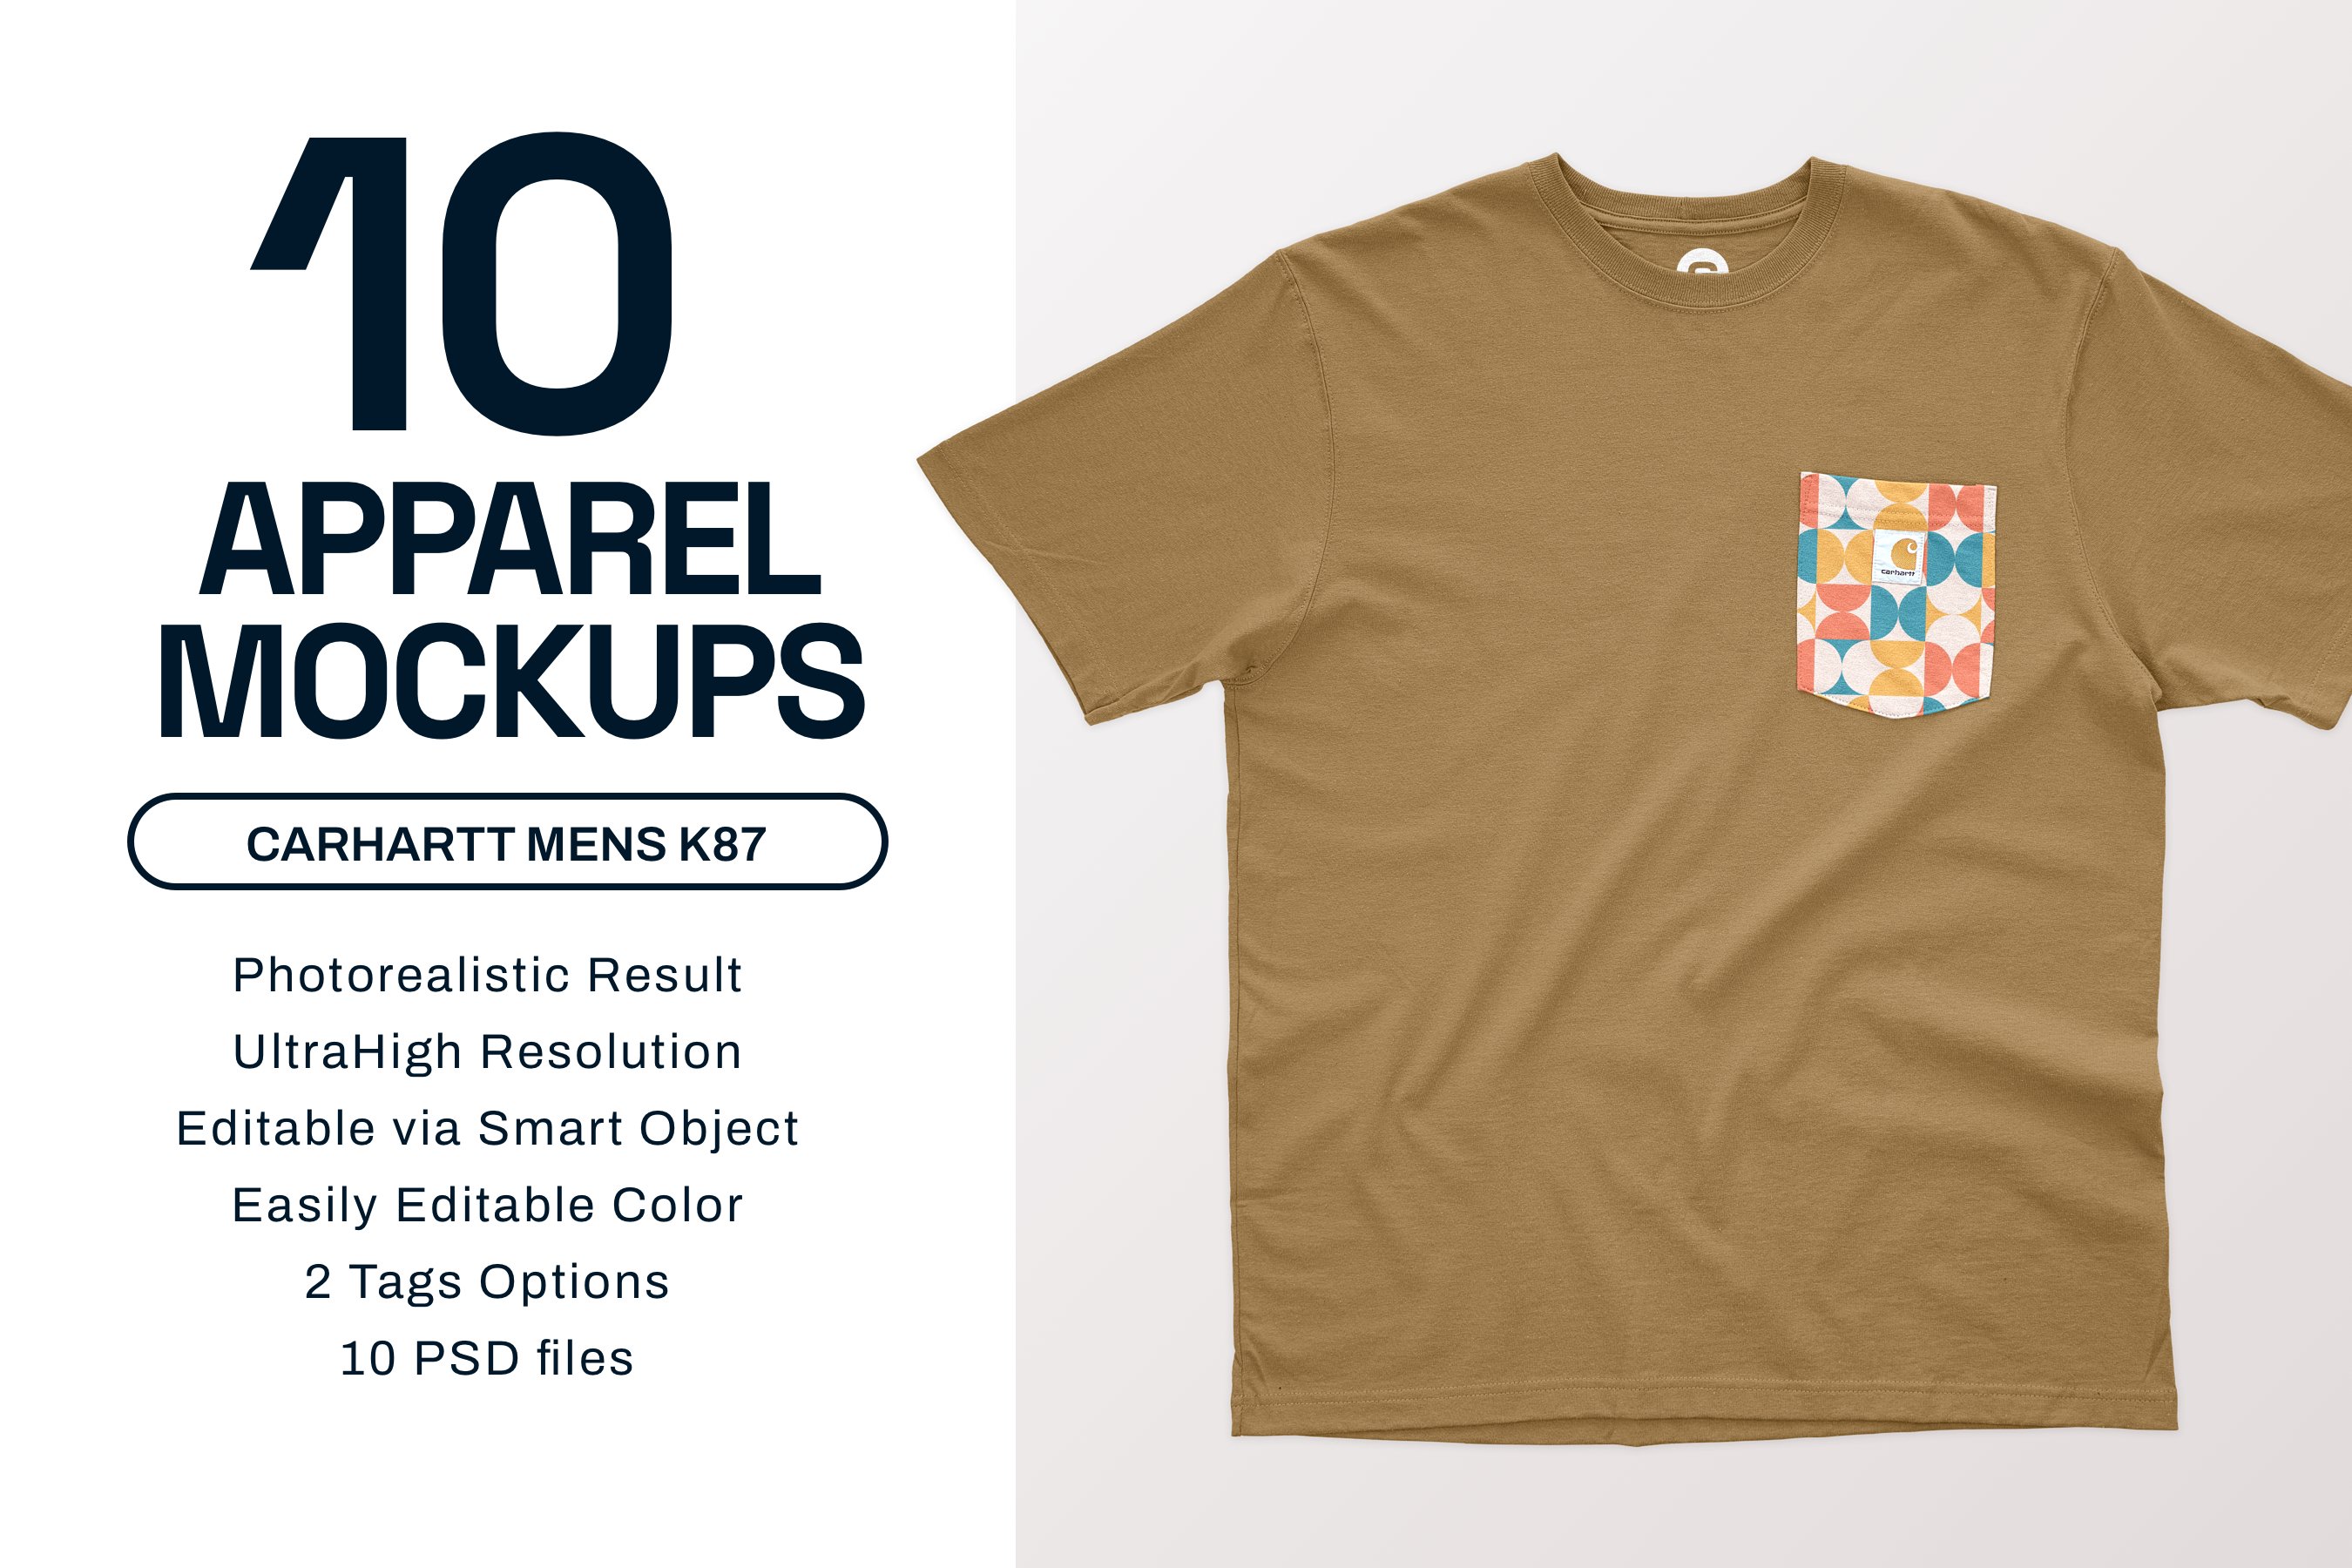 T Shirt-Pocket t-shirt | 3D model